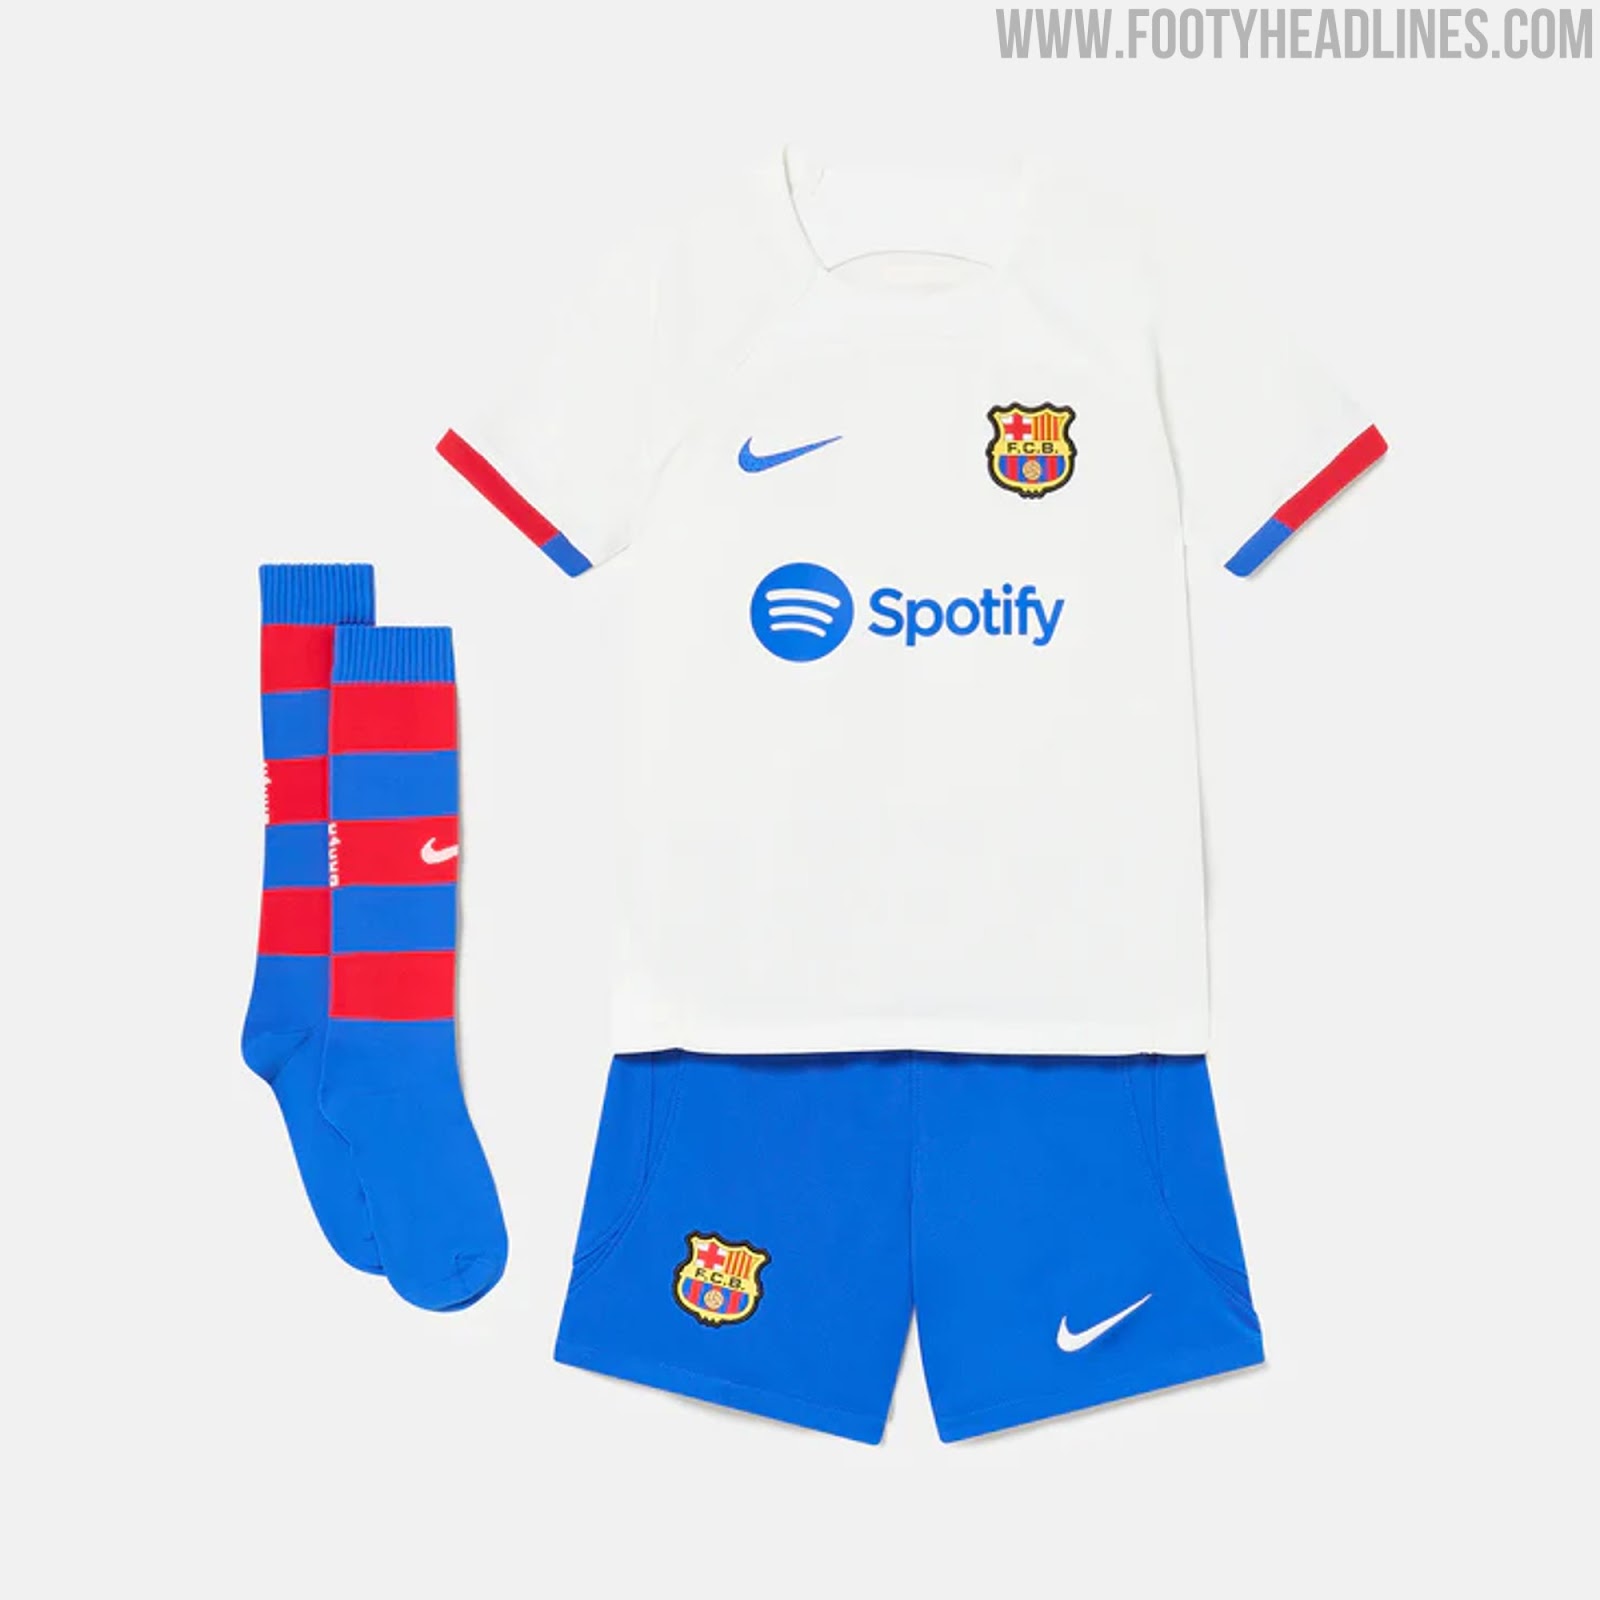 FC Barcelona 23-24 Away Kit Released - Retro Crest - Footy Headlines